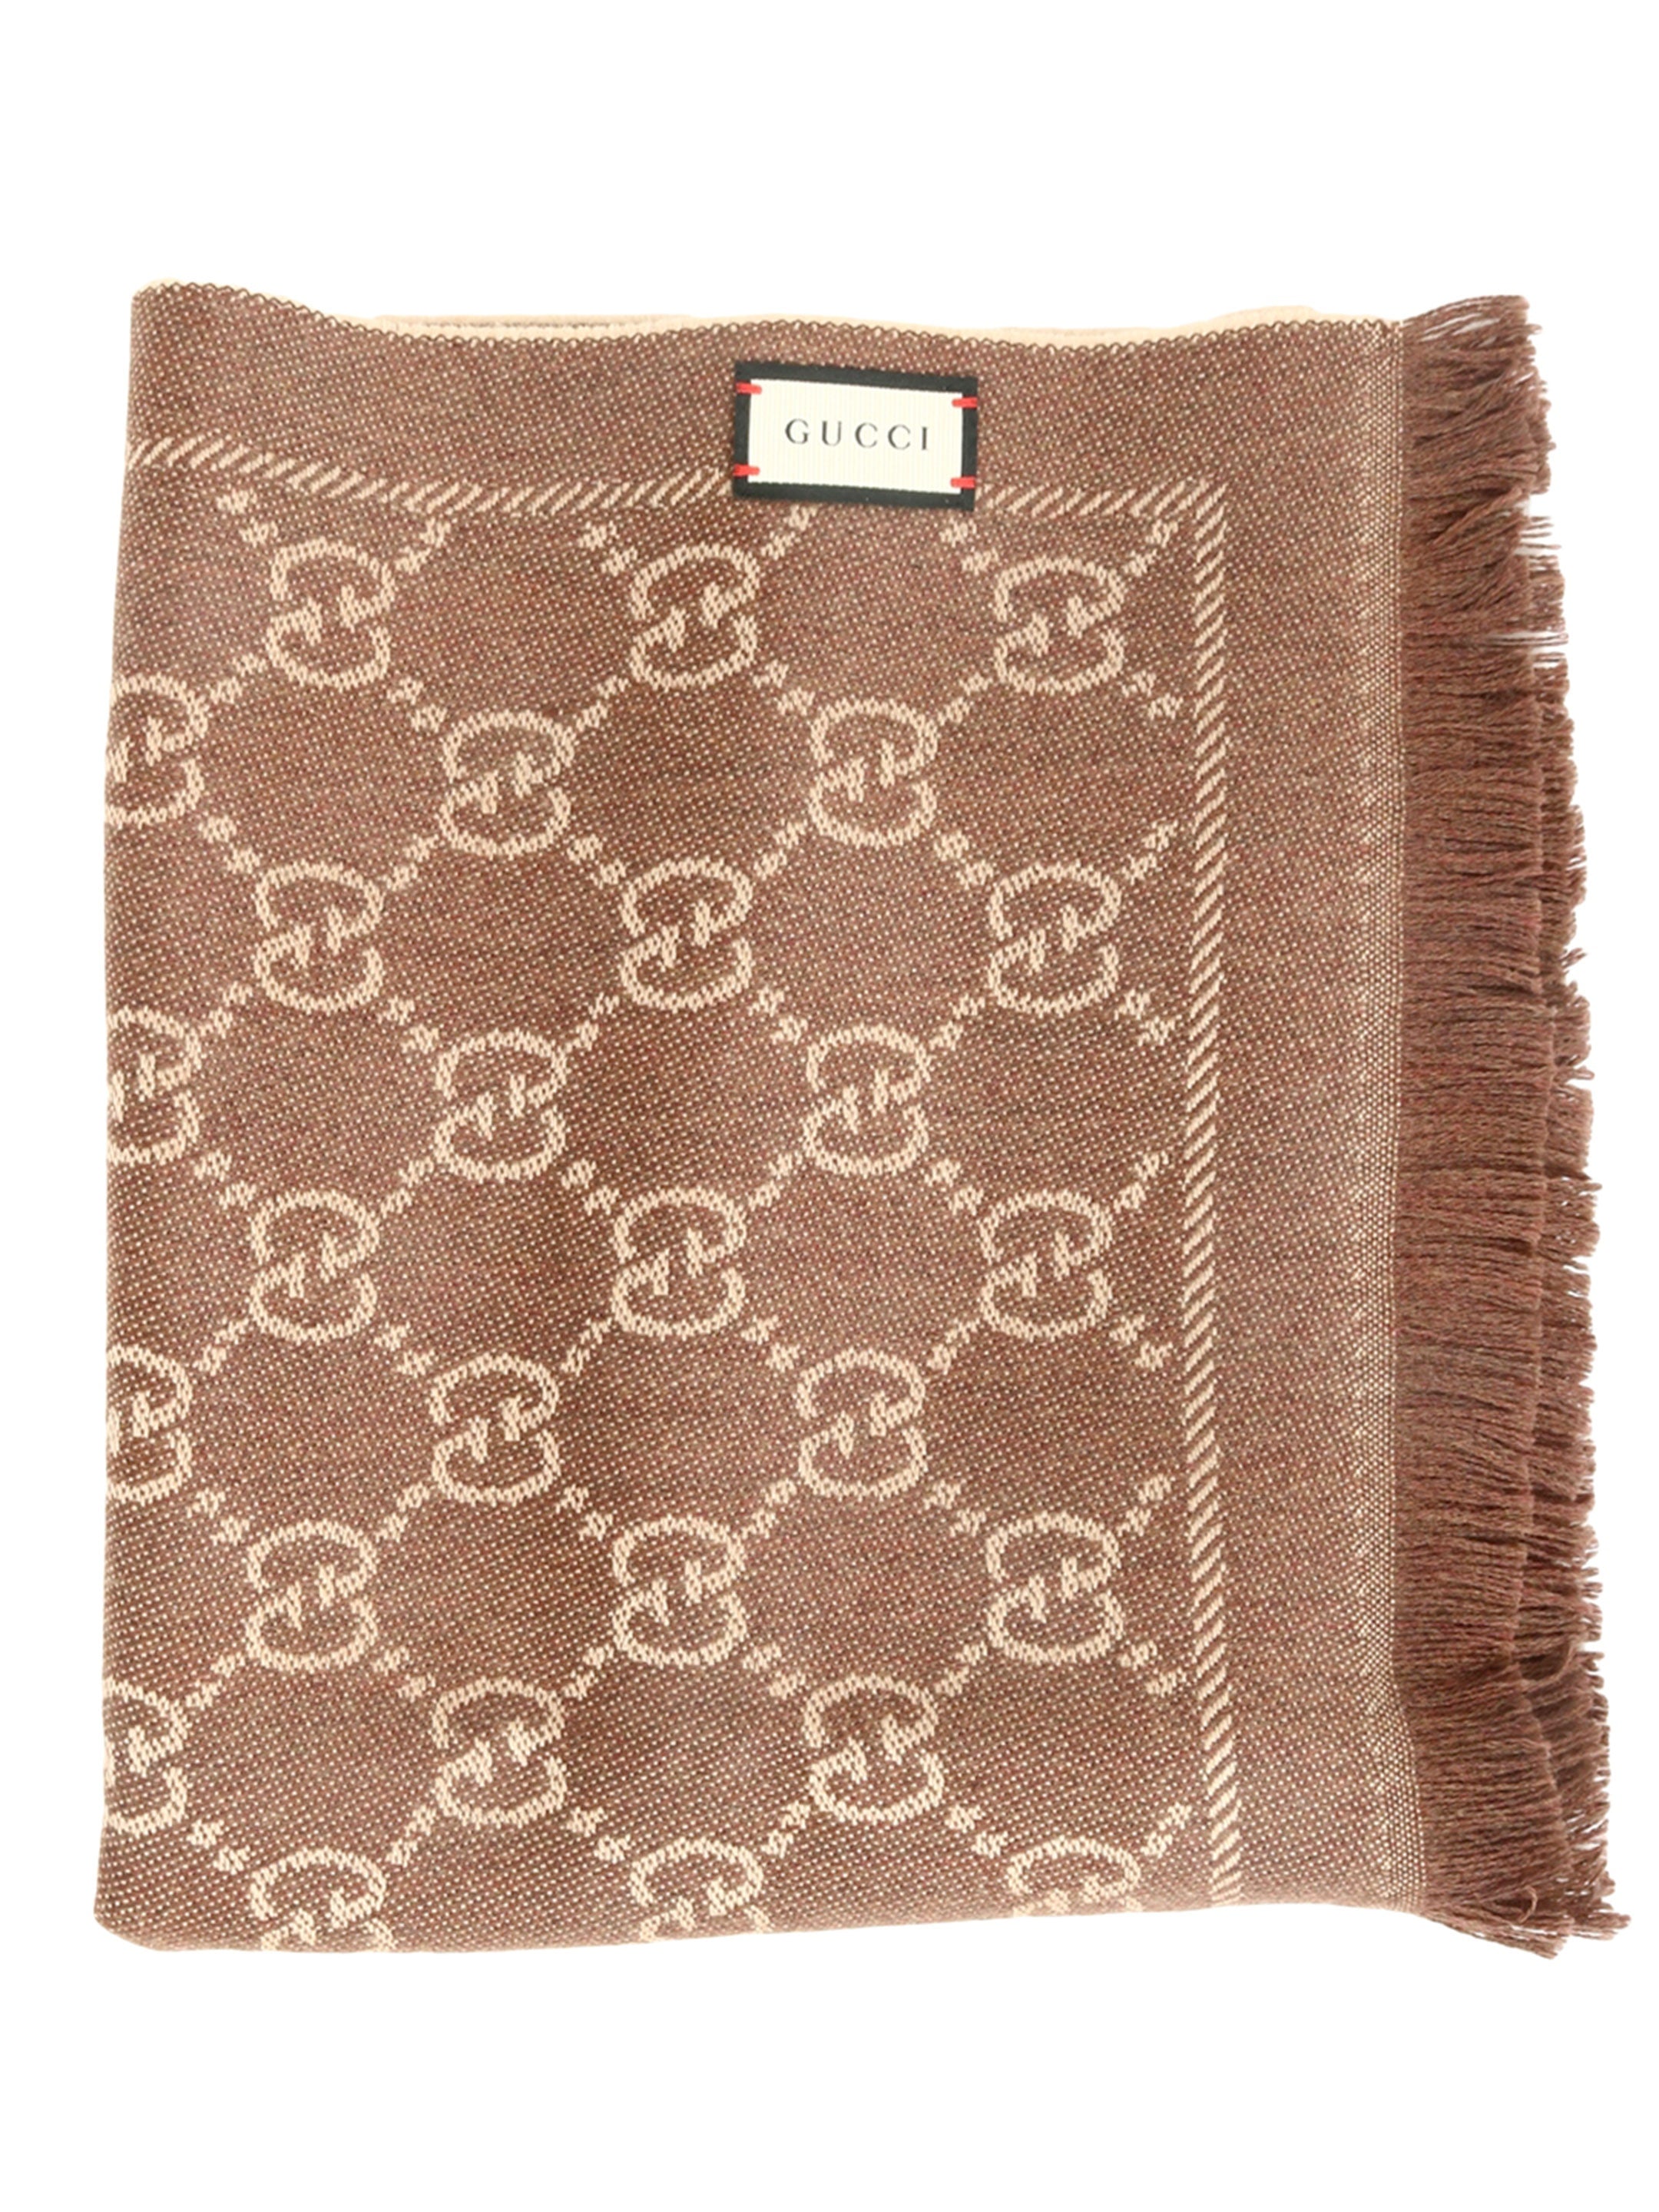 GG motif scarf